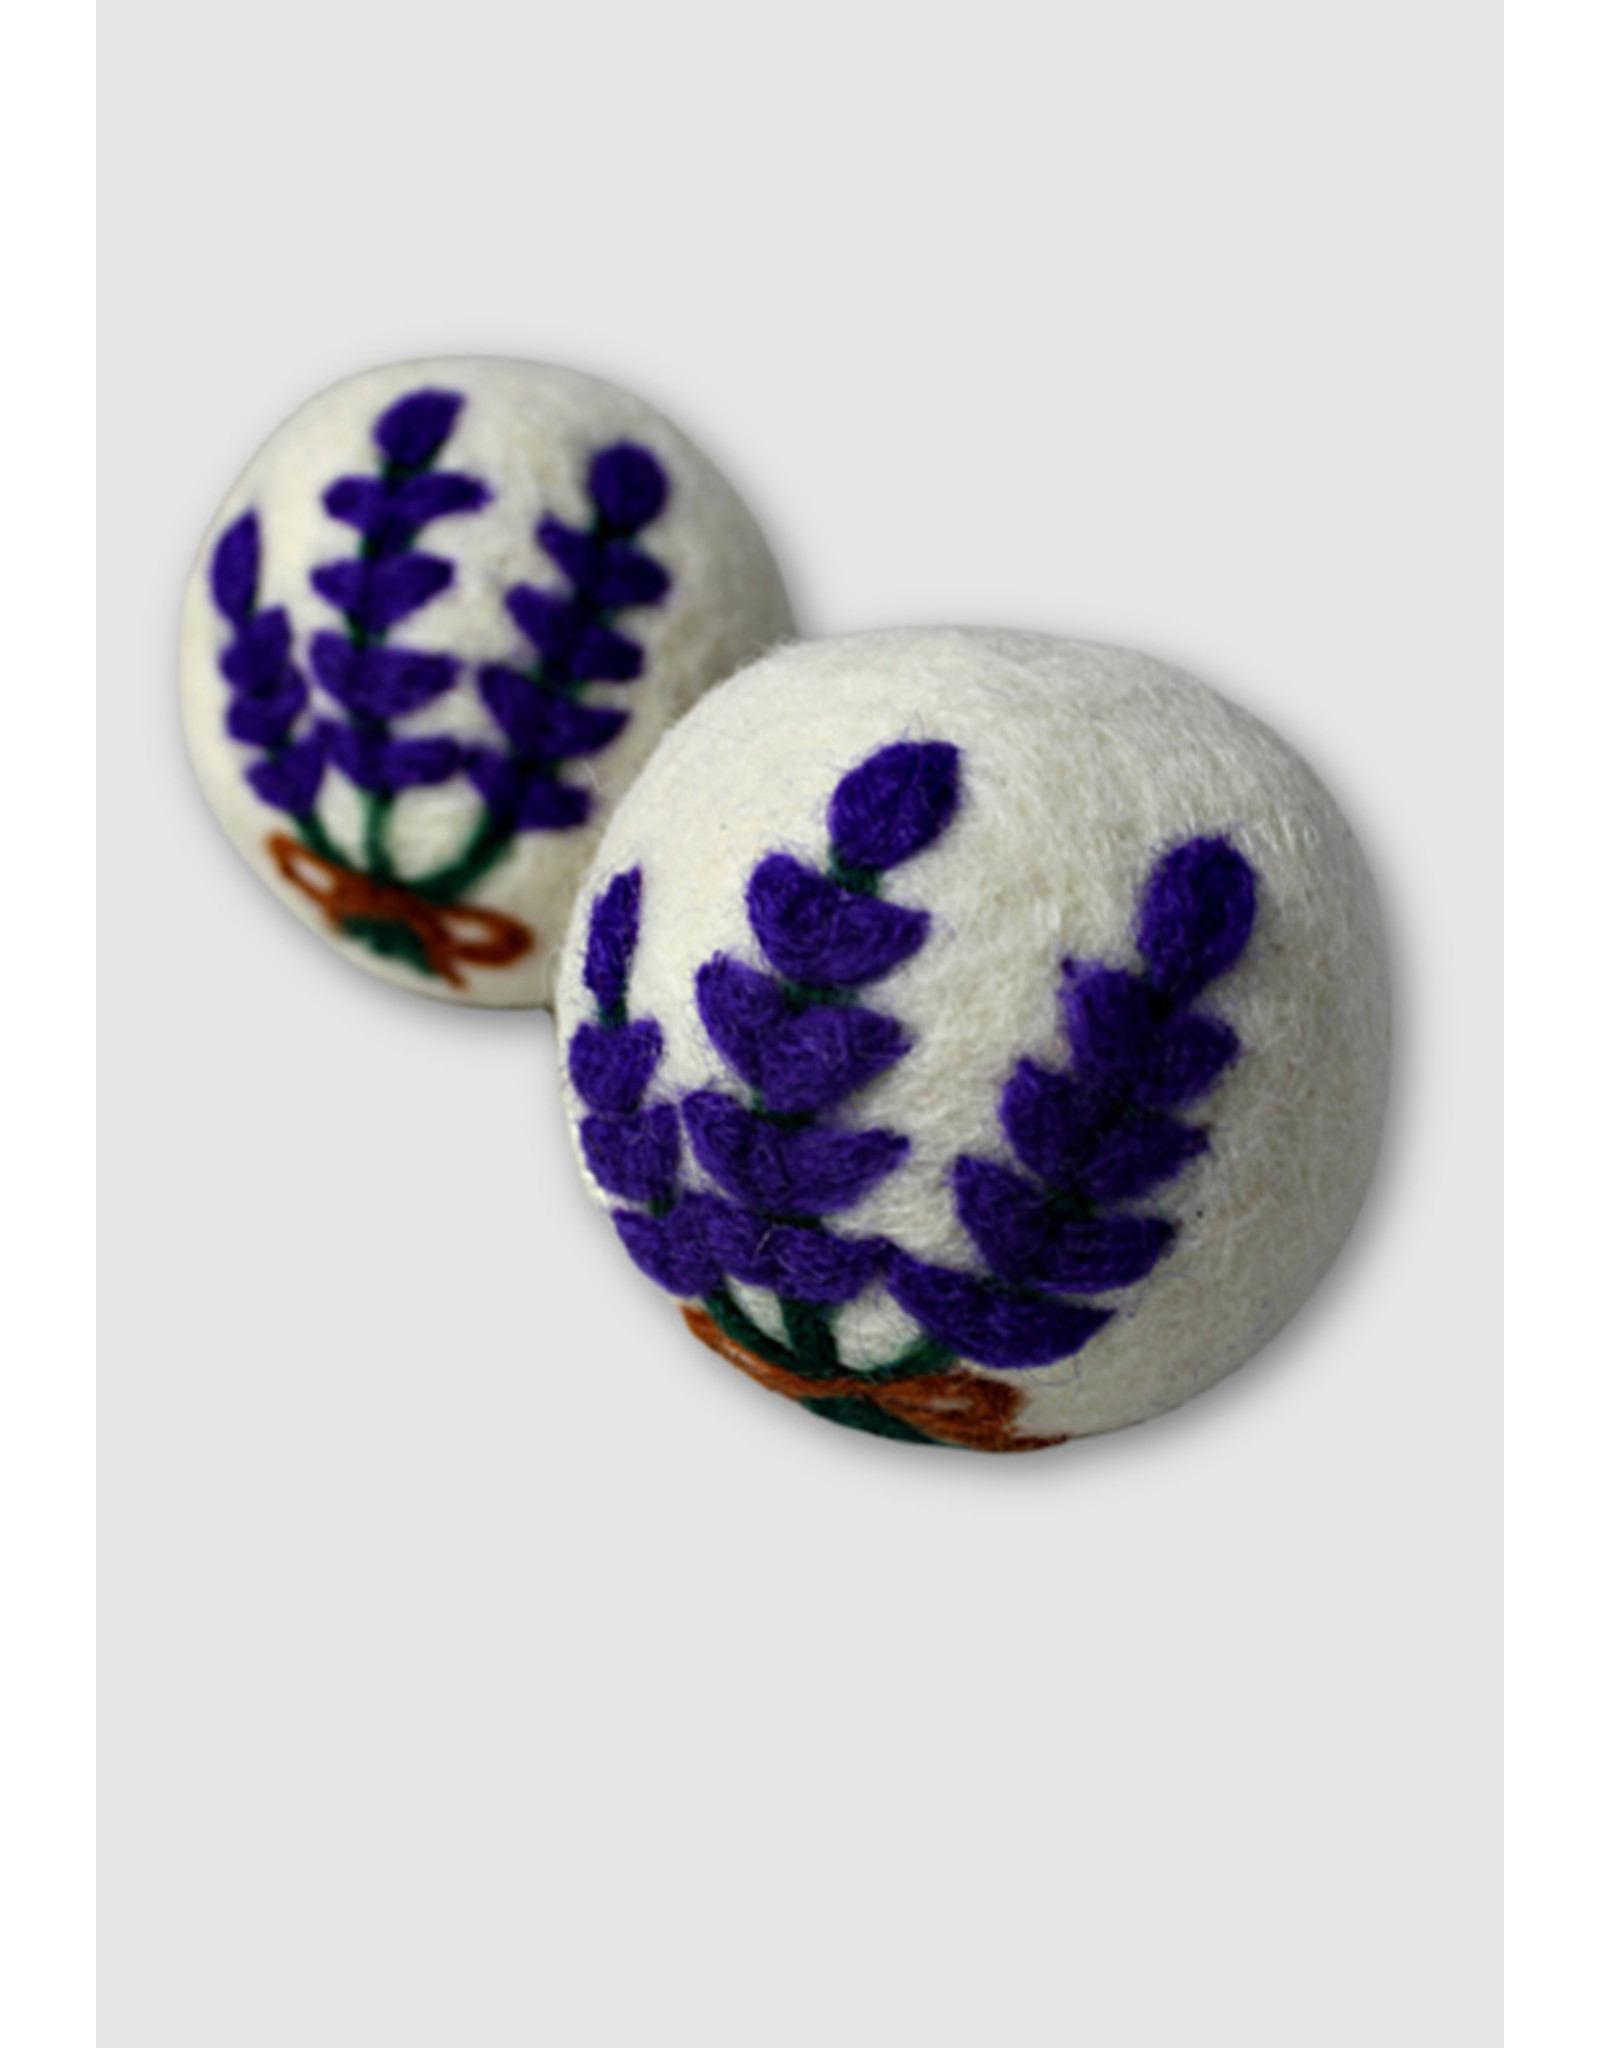 Nepal Wool Felt Dryer Ball (single w/ embroidery), Nepal